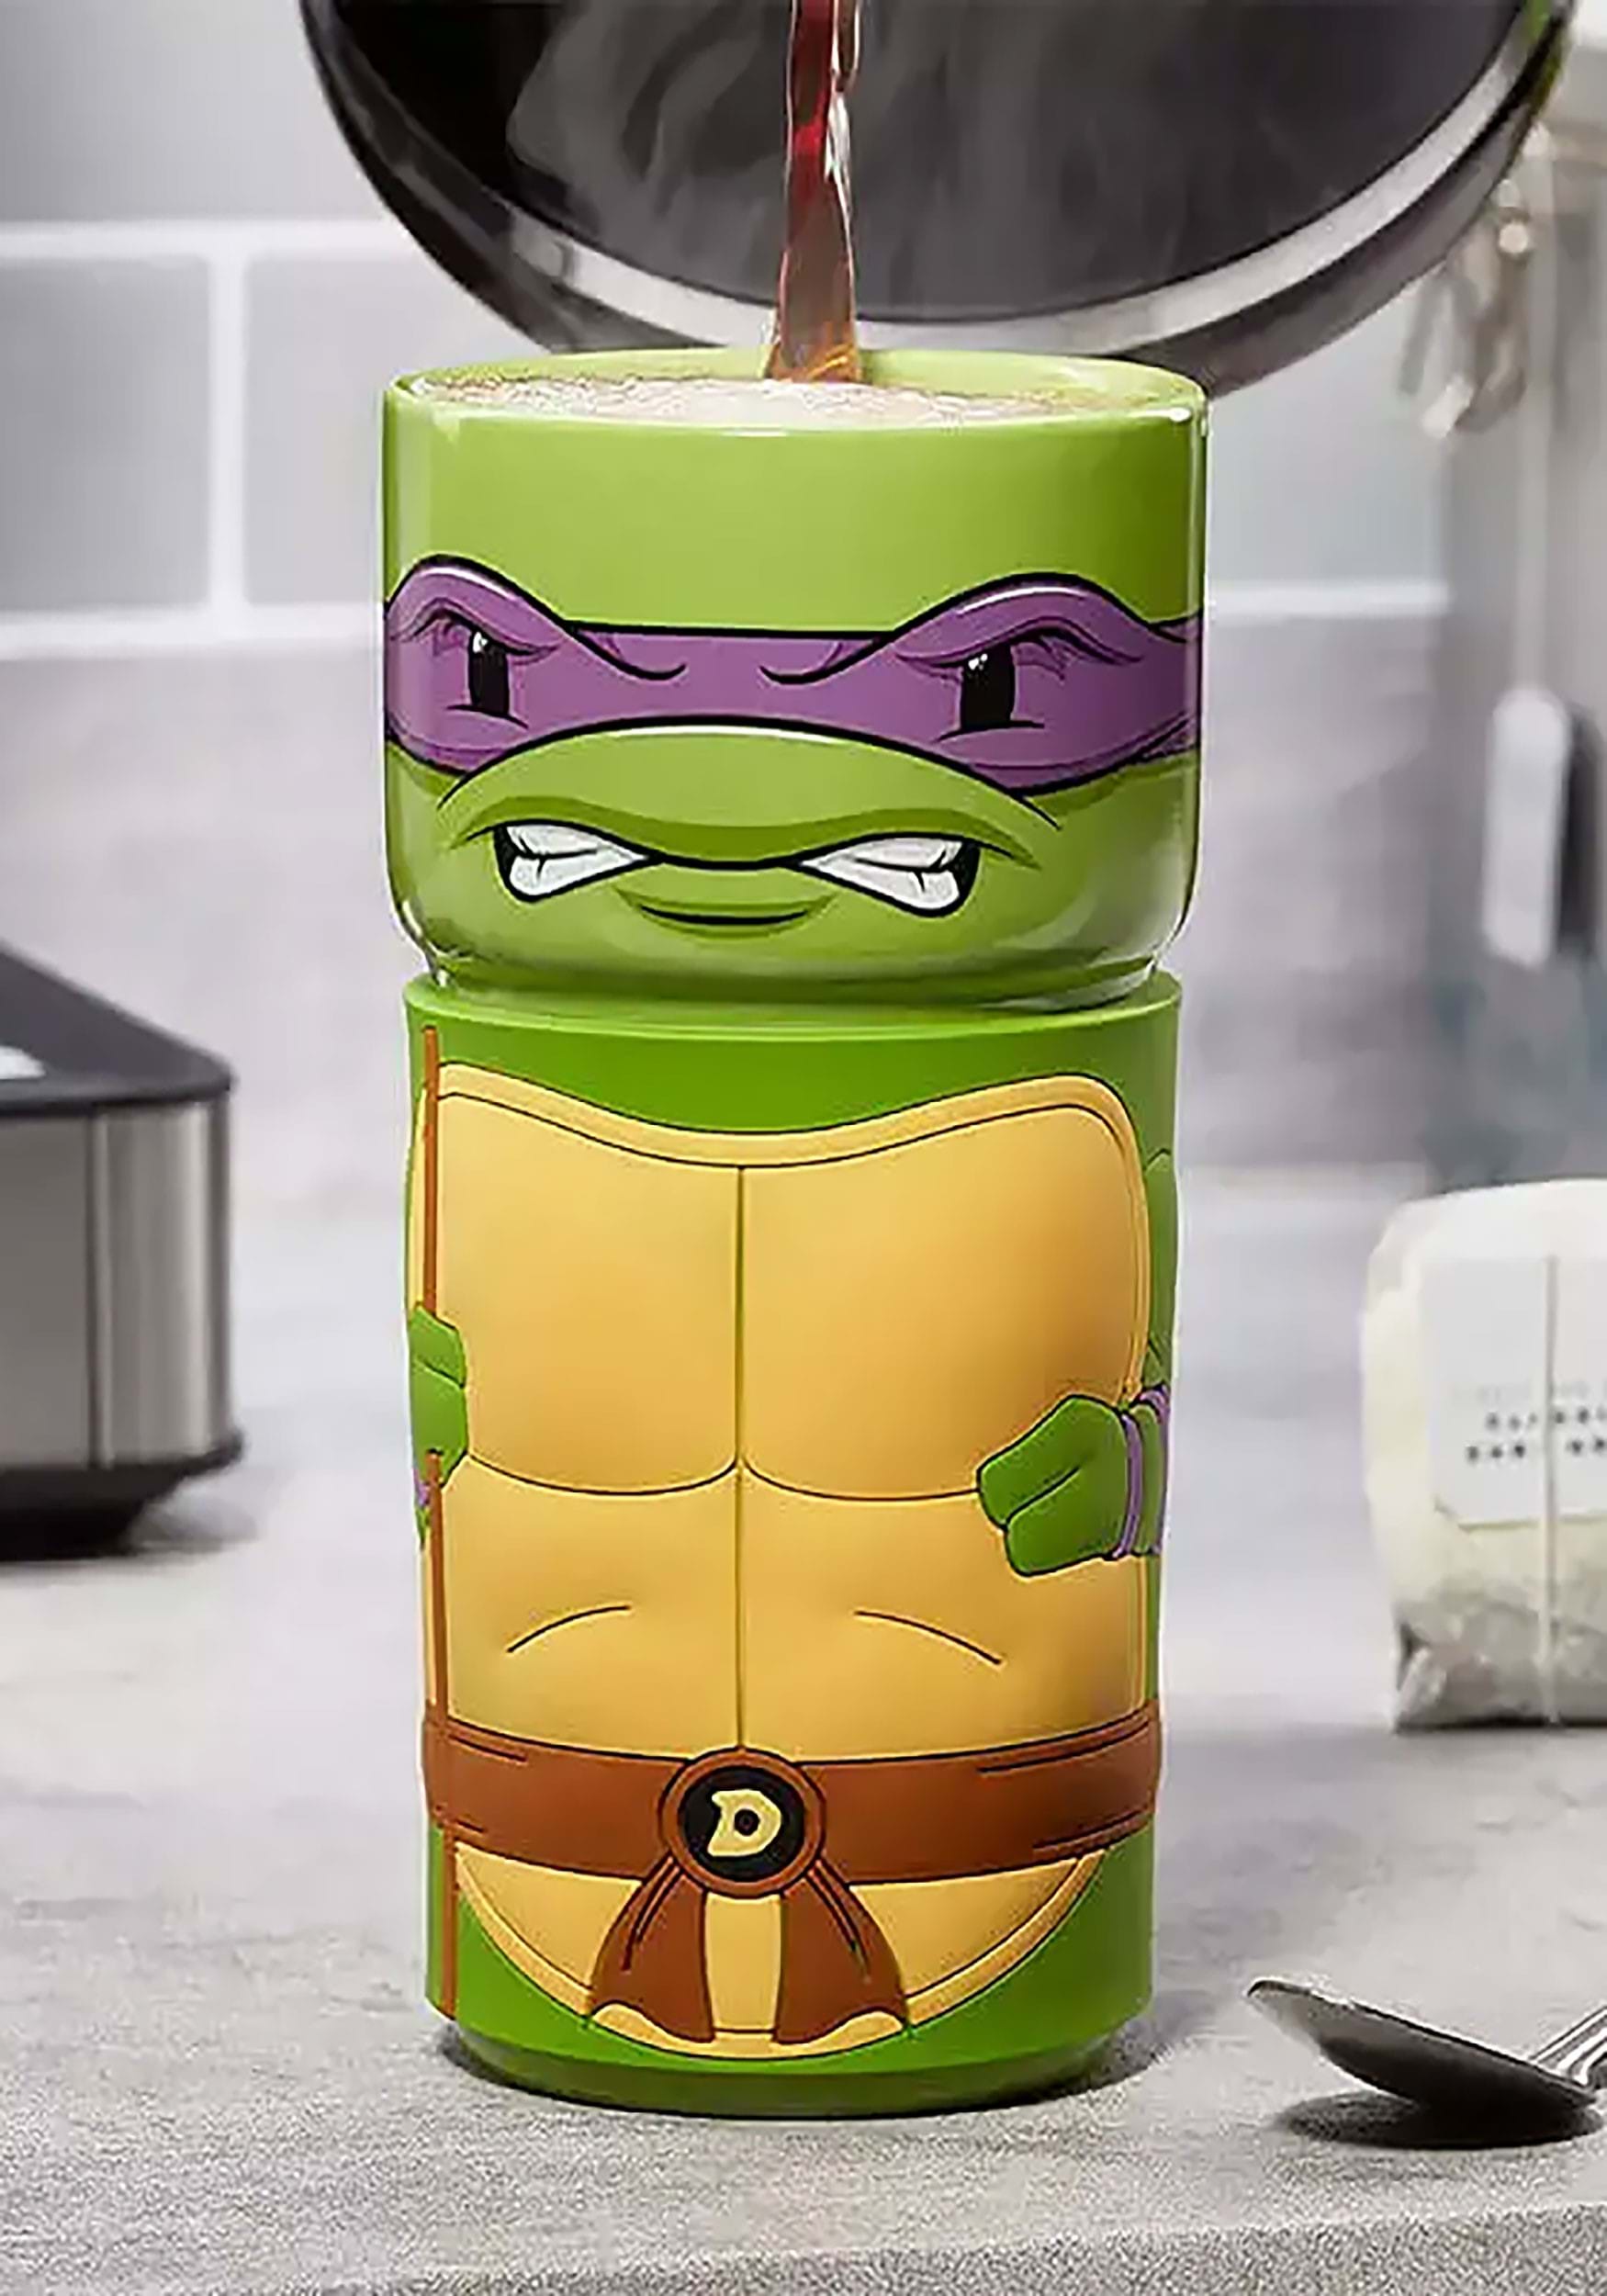 Teenage Mutant Ninja Turtles Phunny Plush - Donatello